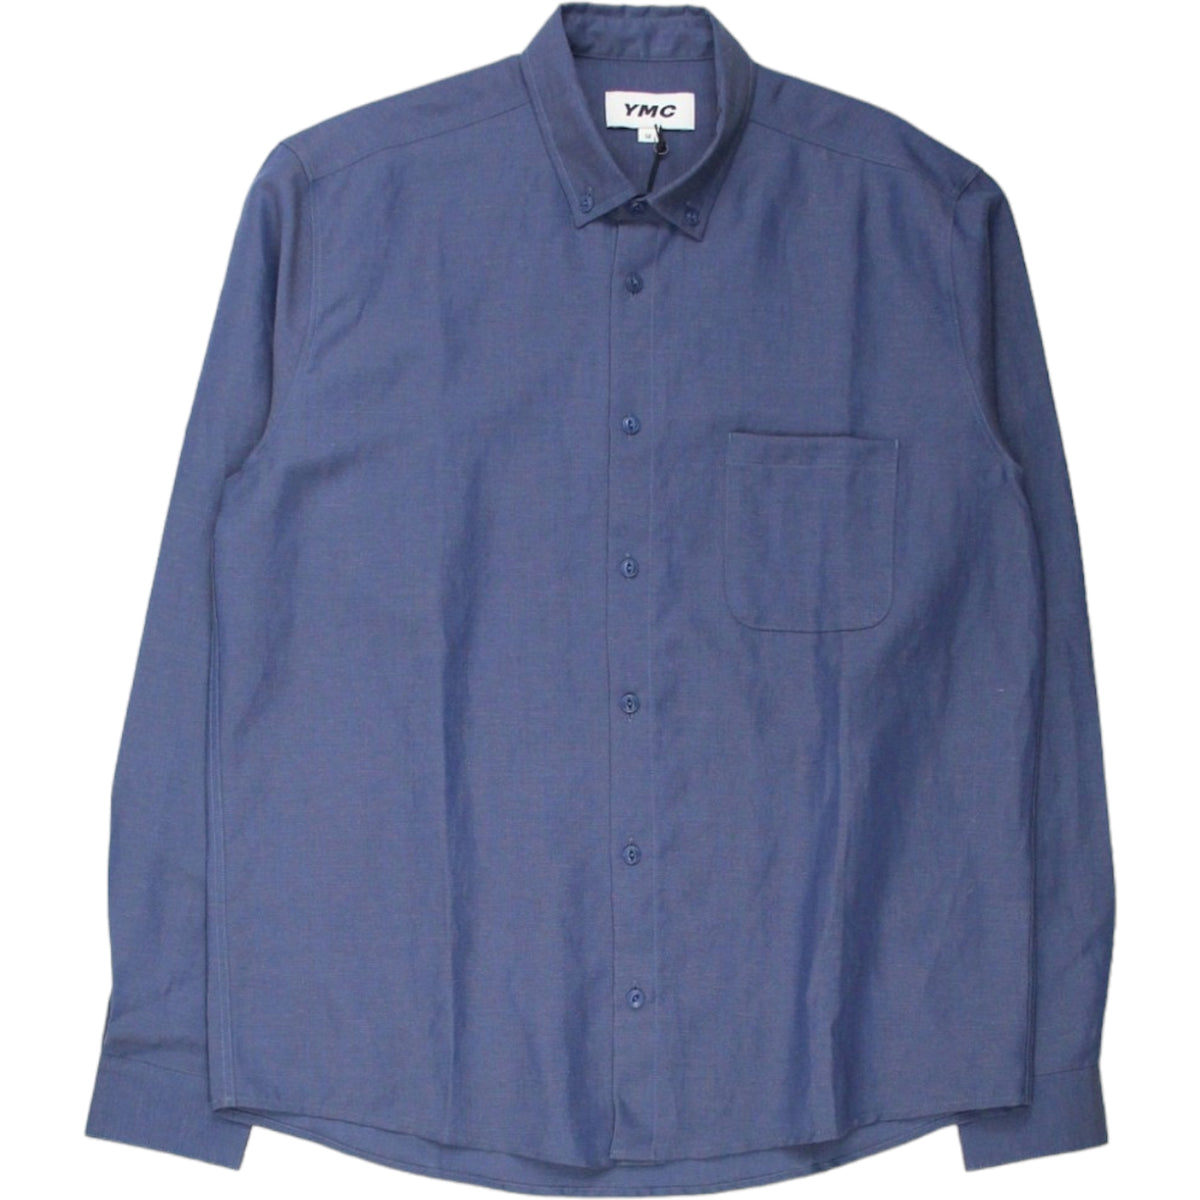 YMC Blue/Stone 2 Tone Shirt